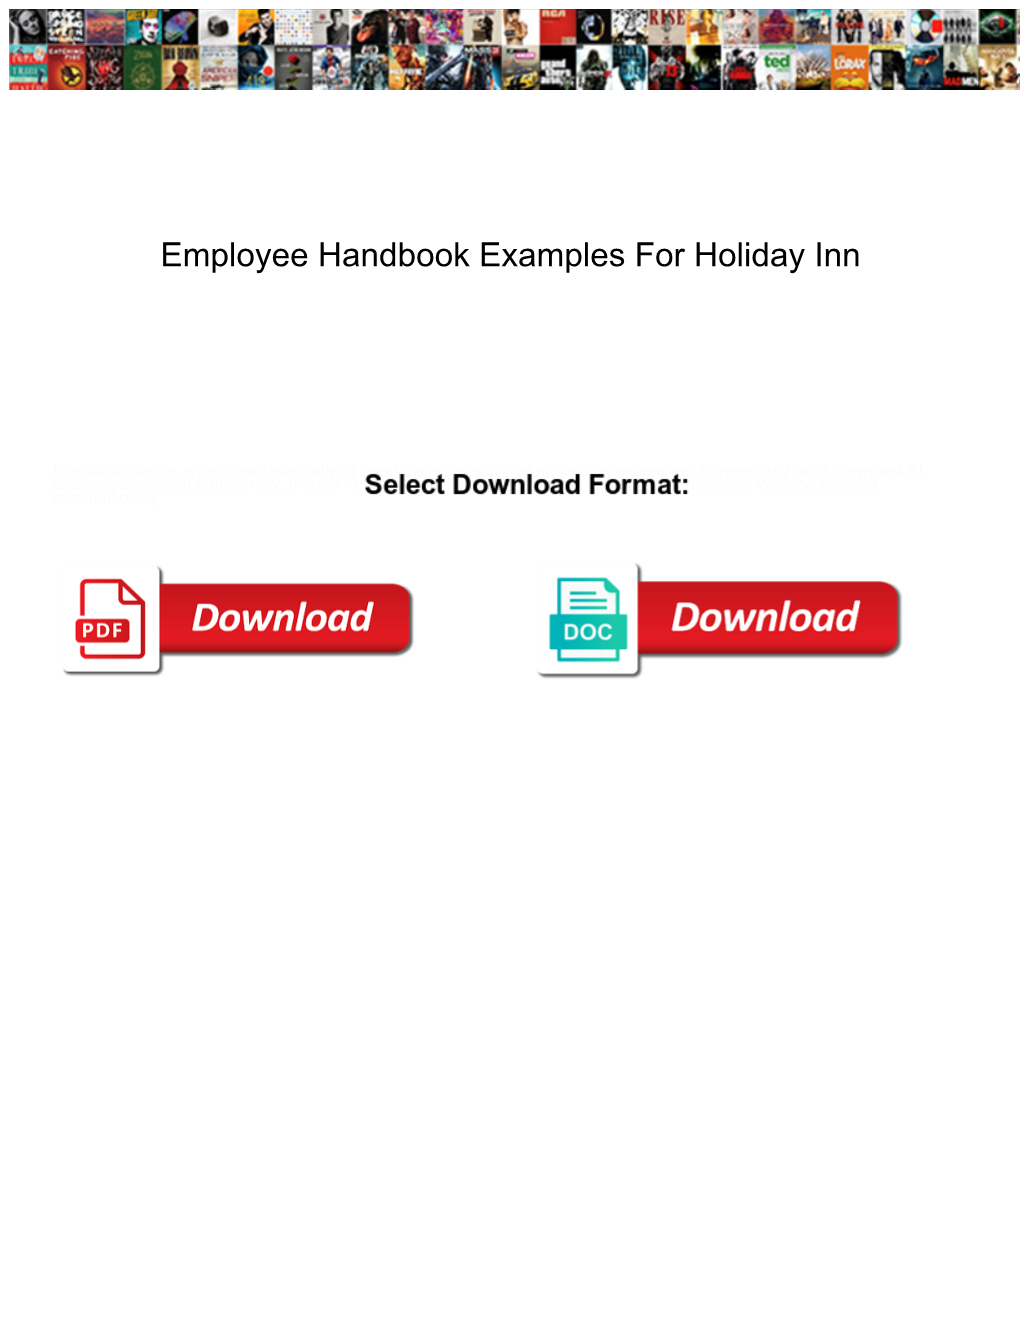 Employee Handbook Examples for Holiday Inn